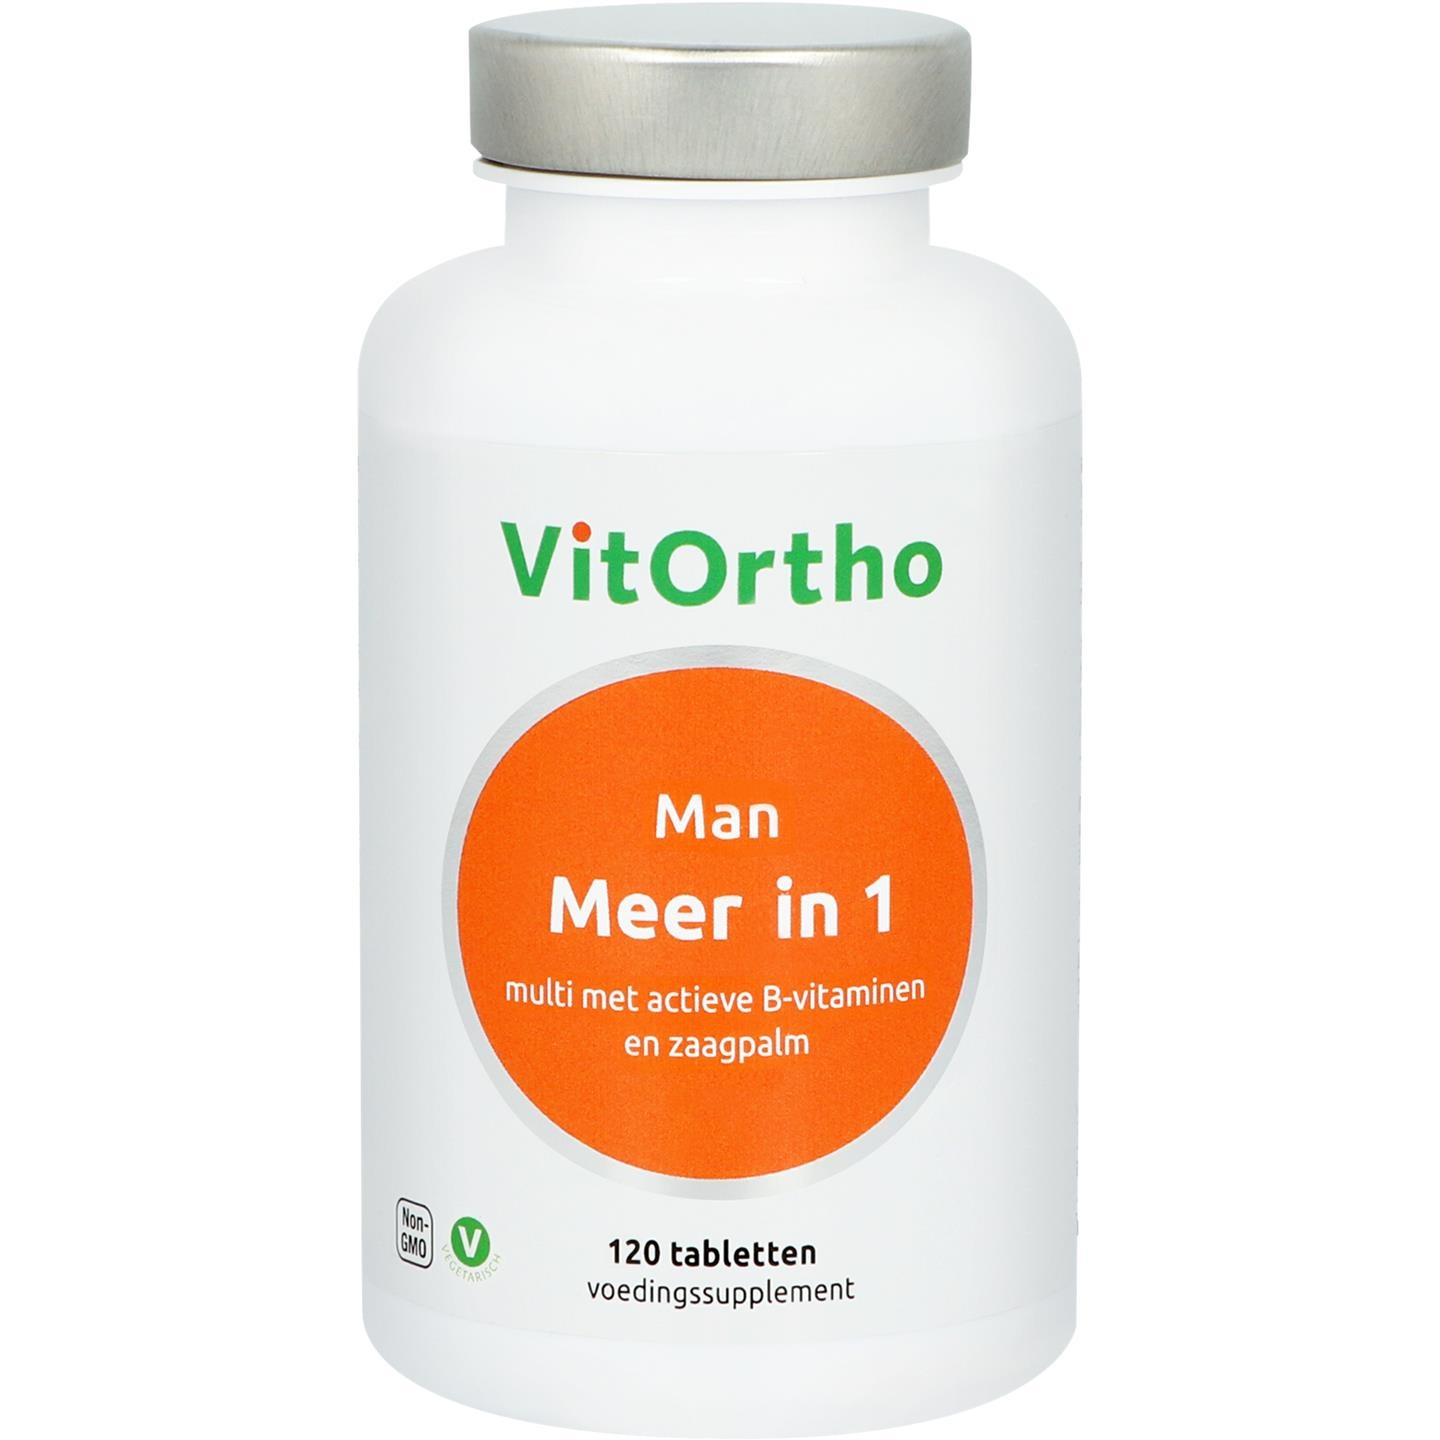 Vitortho VitOrtho Mehr in 1 Mann (120 Tabletten)